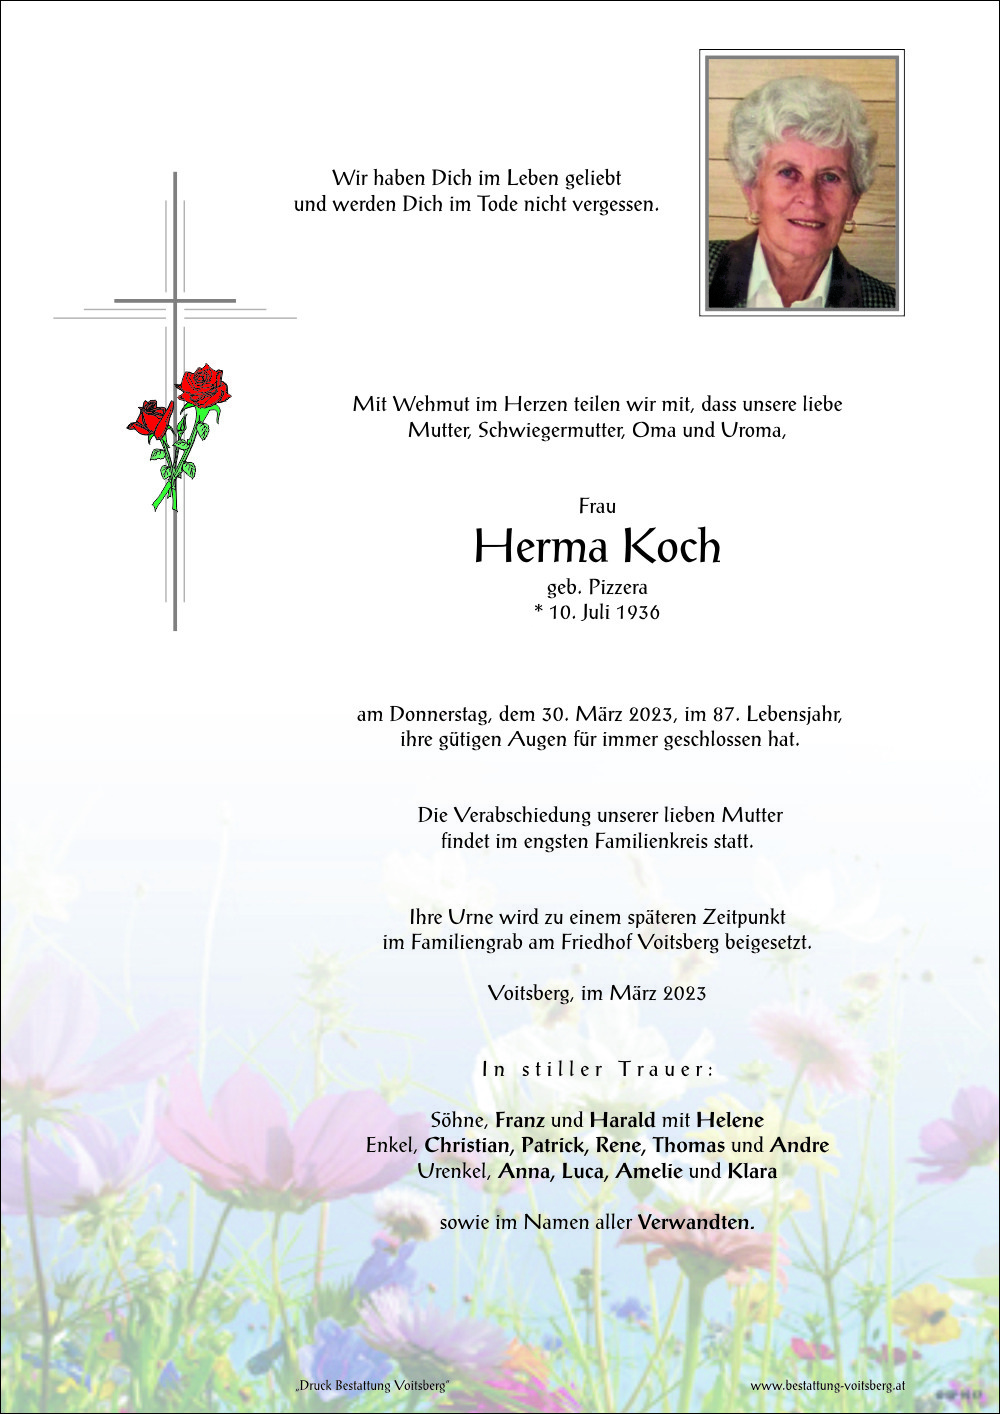 Herma Koch